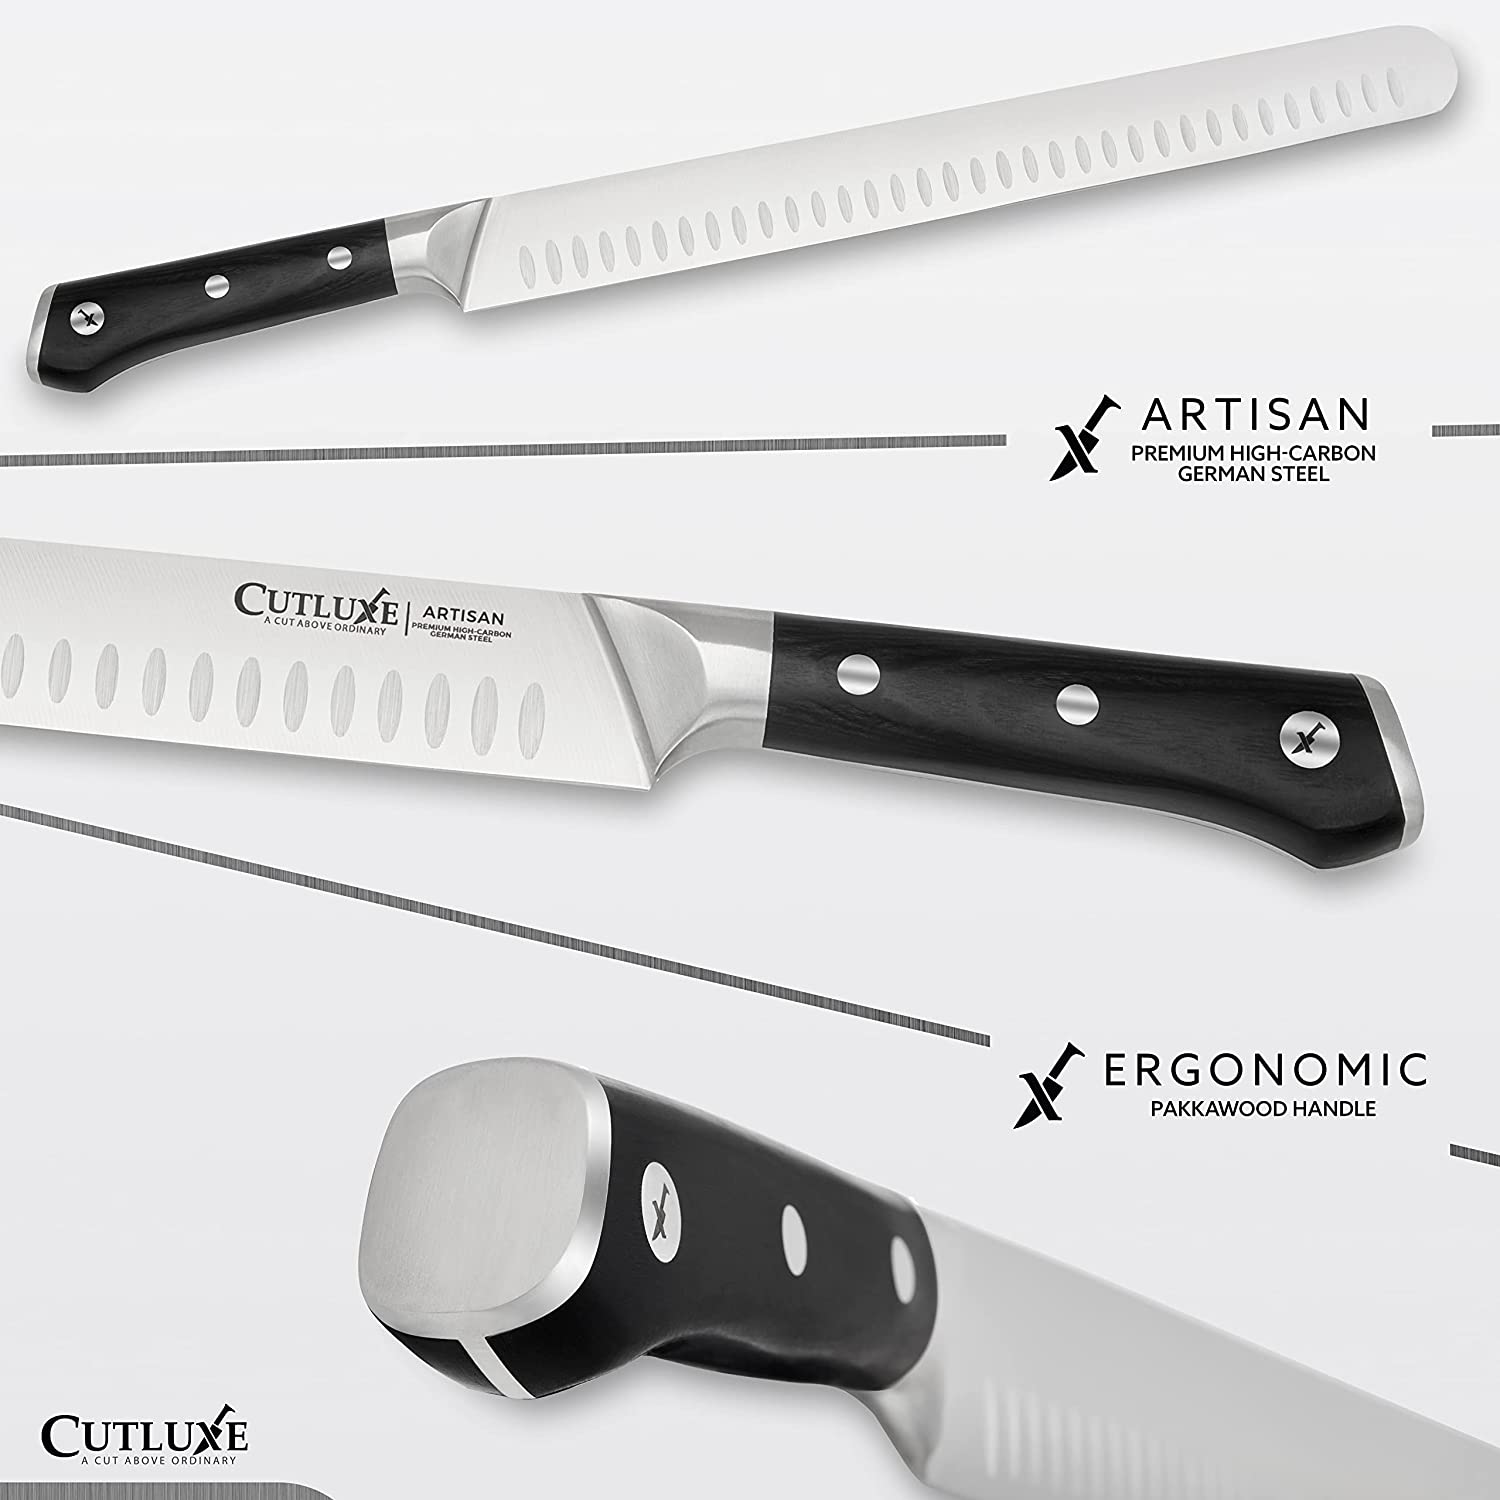 Choice 14 Granton Edge Slicing Knife with White Handle